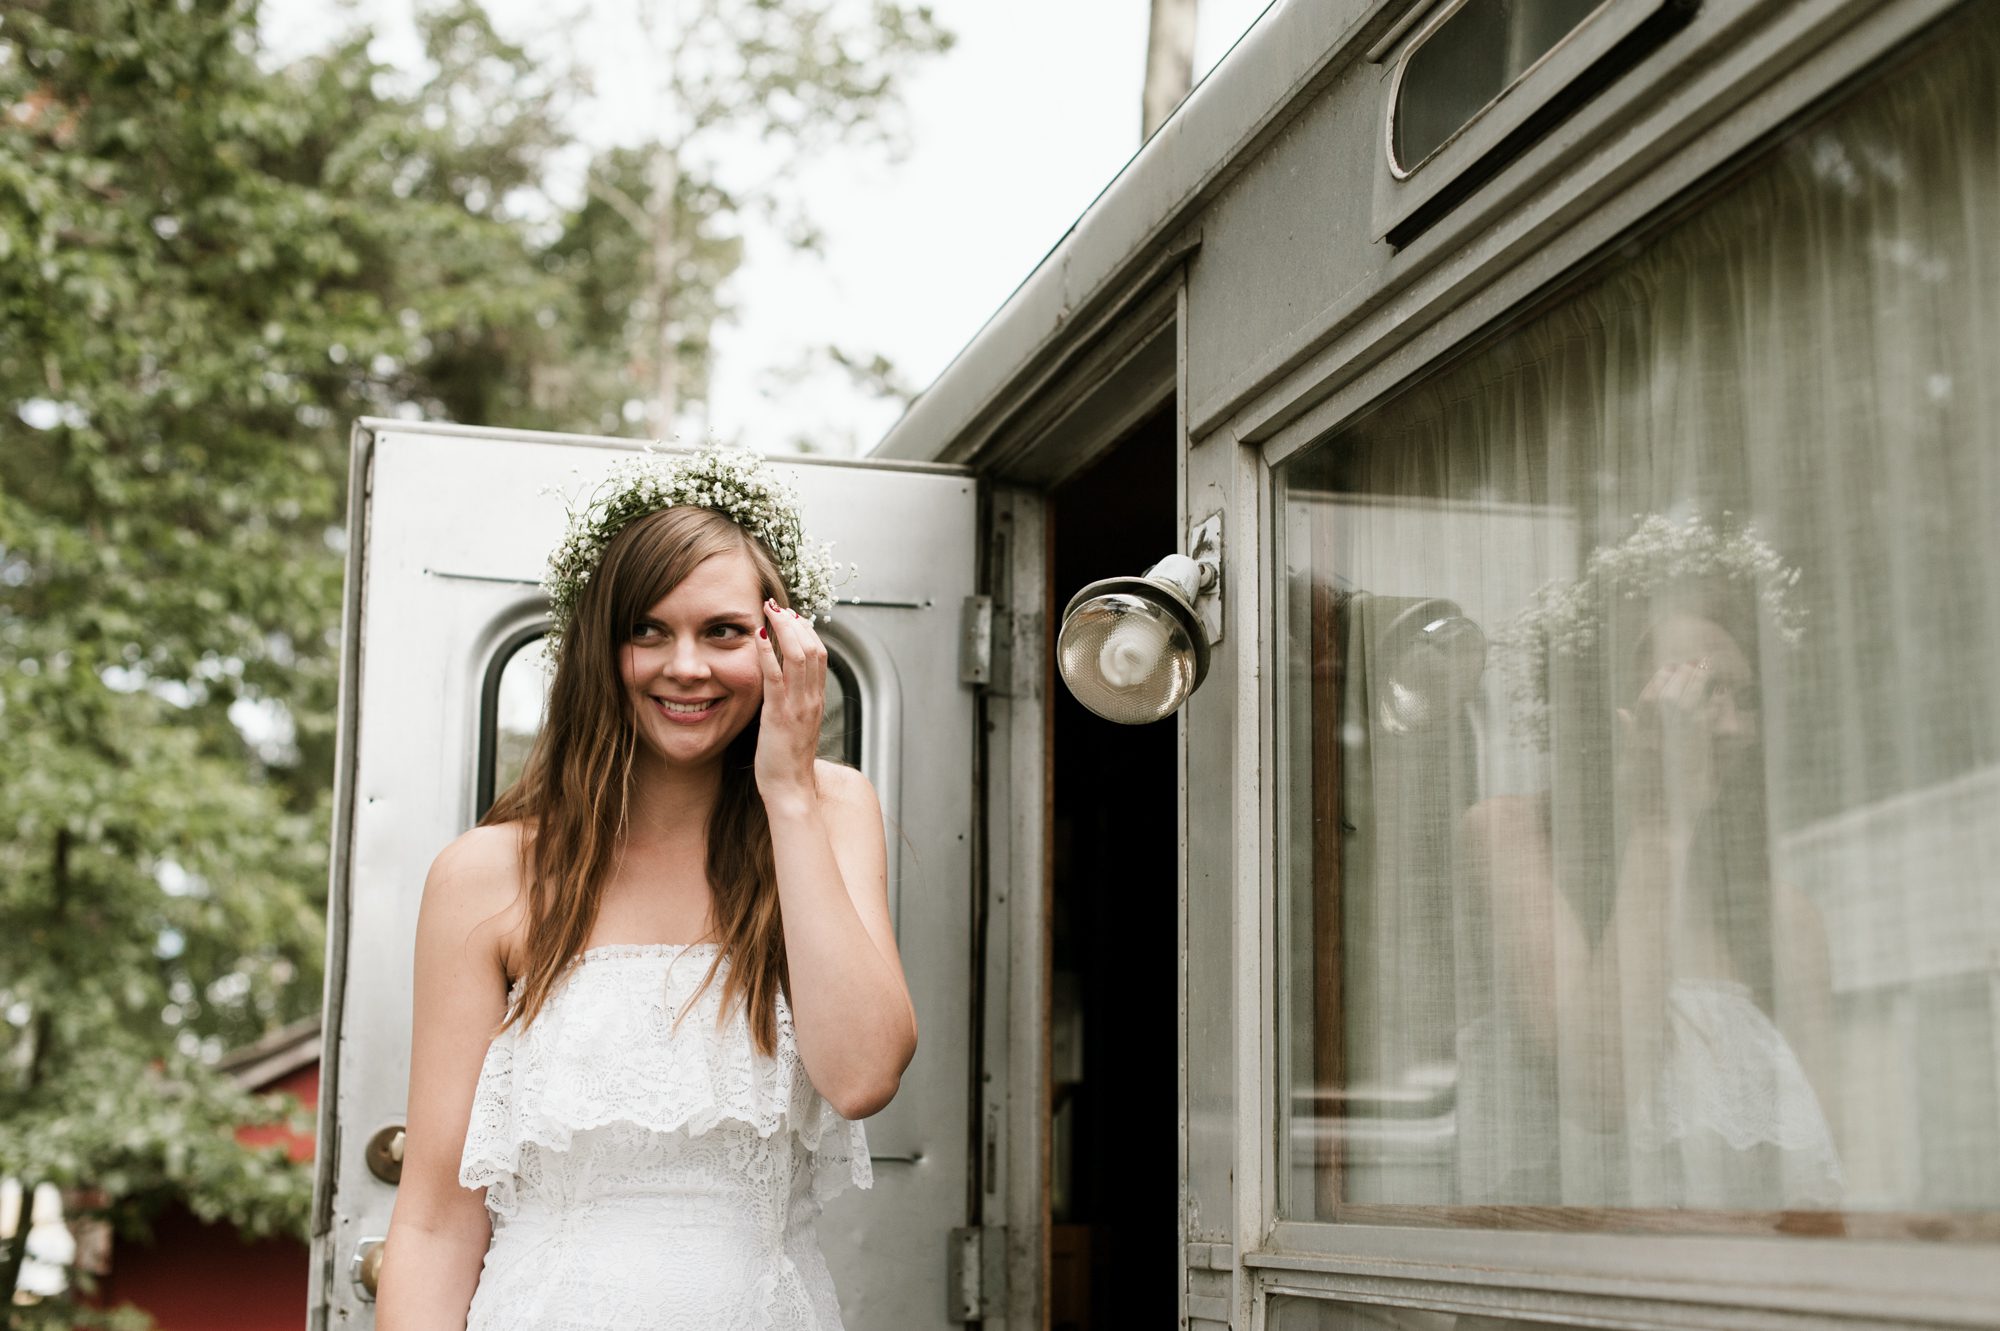 A blushing bride outside a vintage Airstream trailer. By Long Beach, Washington wedding photographer Briana Morrison